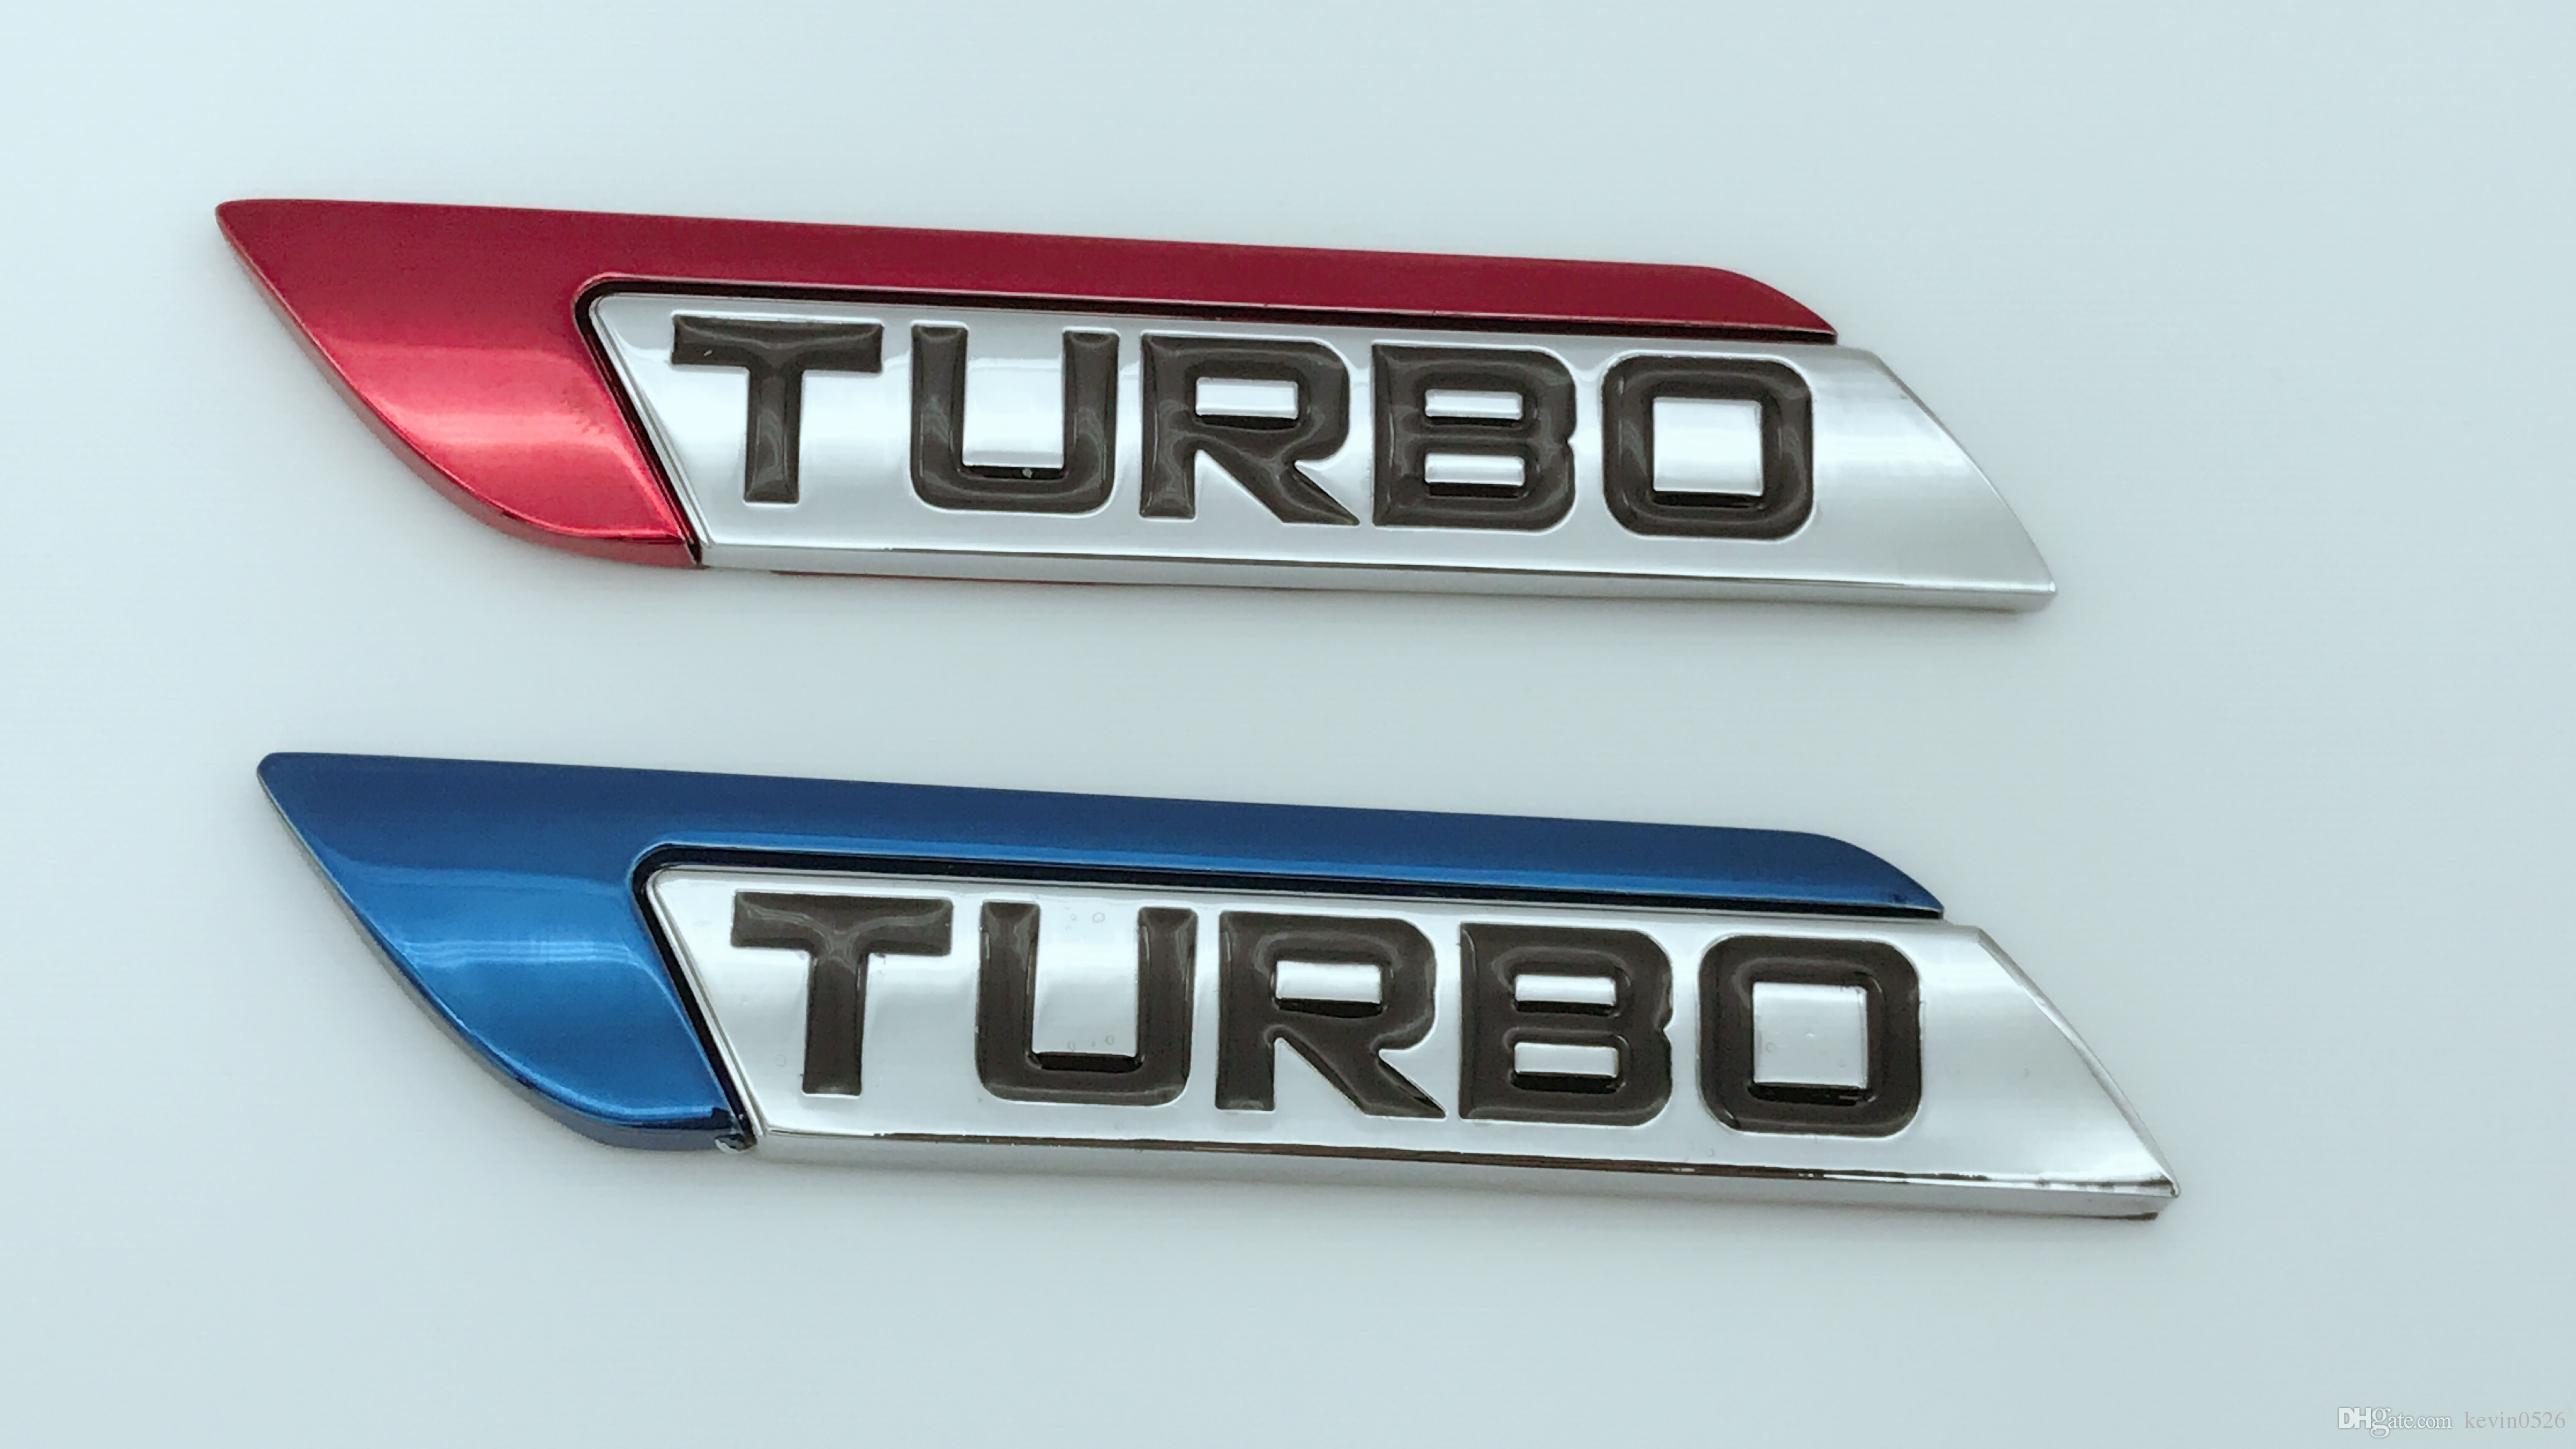 Turbo Logo - 2019 New Red/Blue Turbo Logo 3D Metal Car Auto SUV Body Fender ...